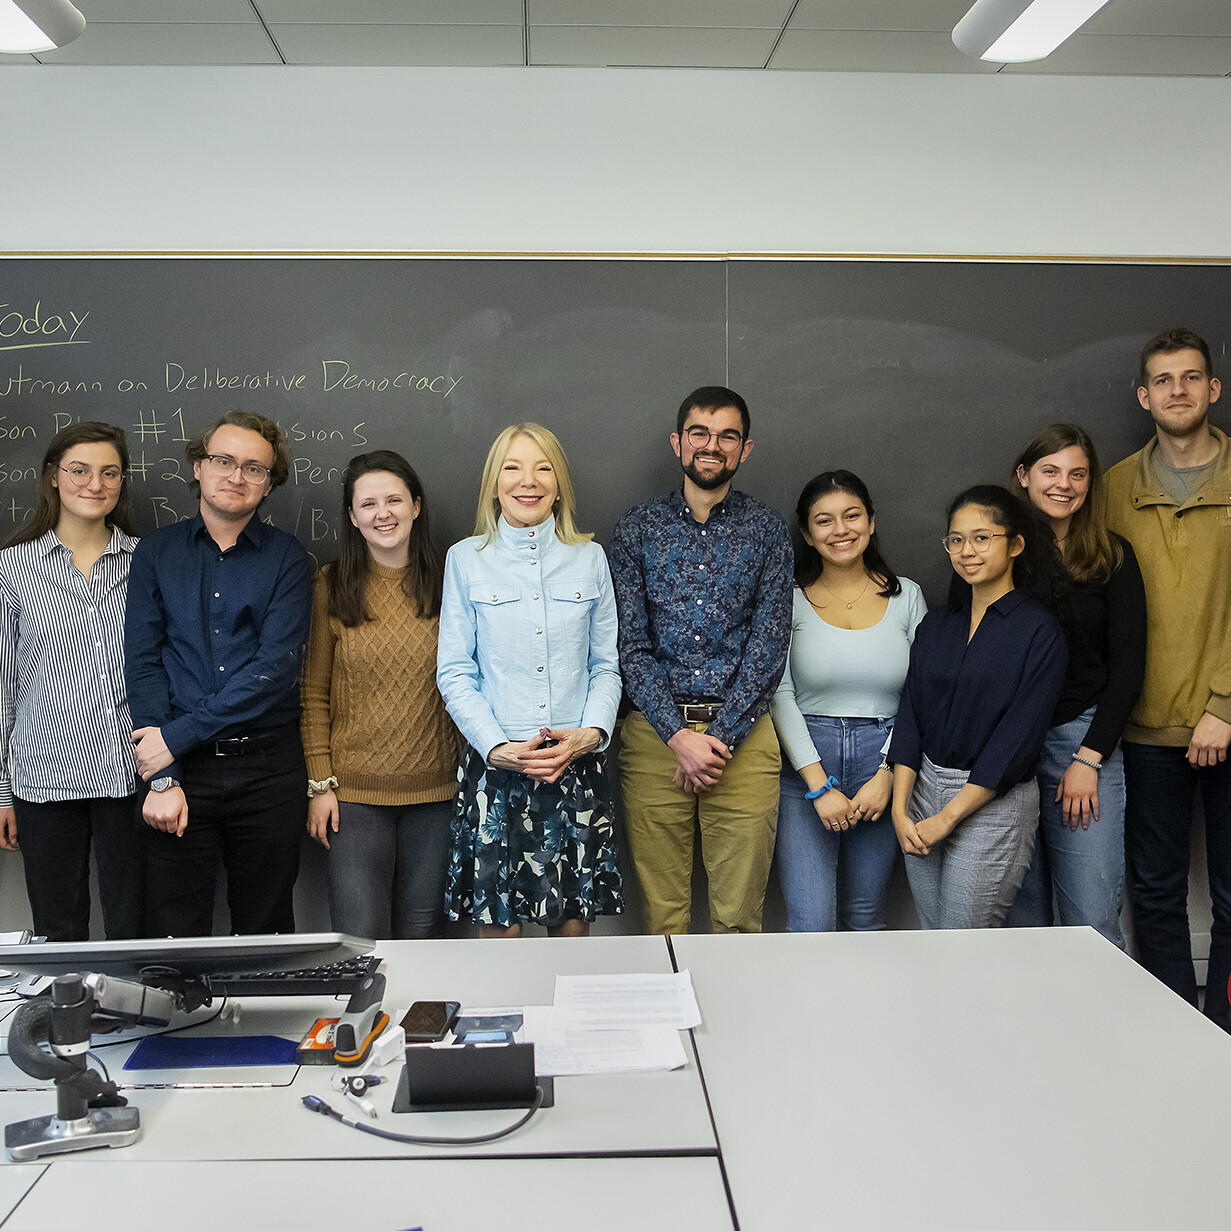 Amy Gutmann, Penn President, 2020 ABCS Philosophy 148 Course Visit